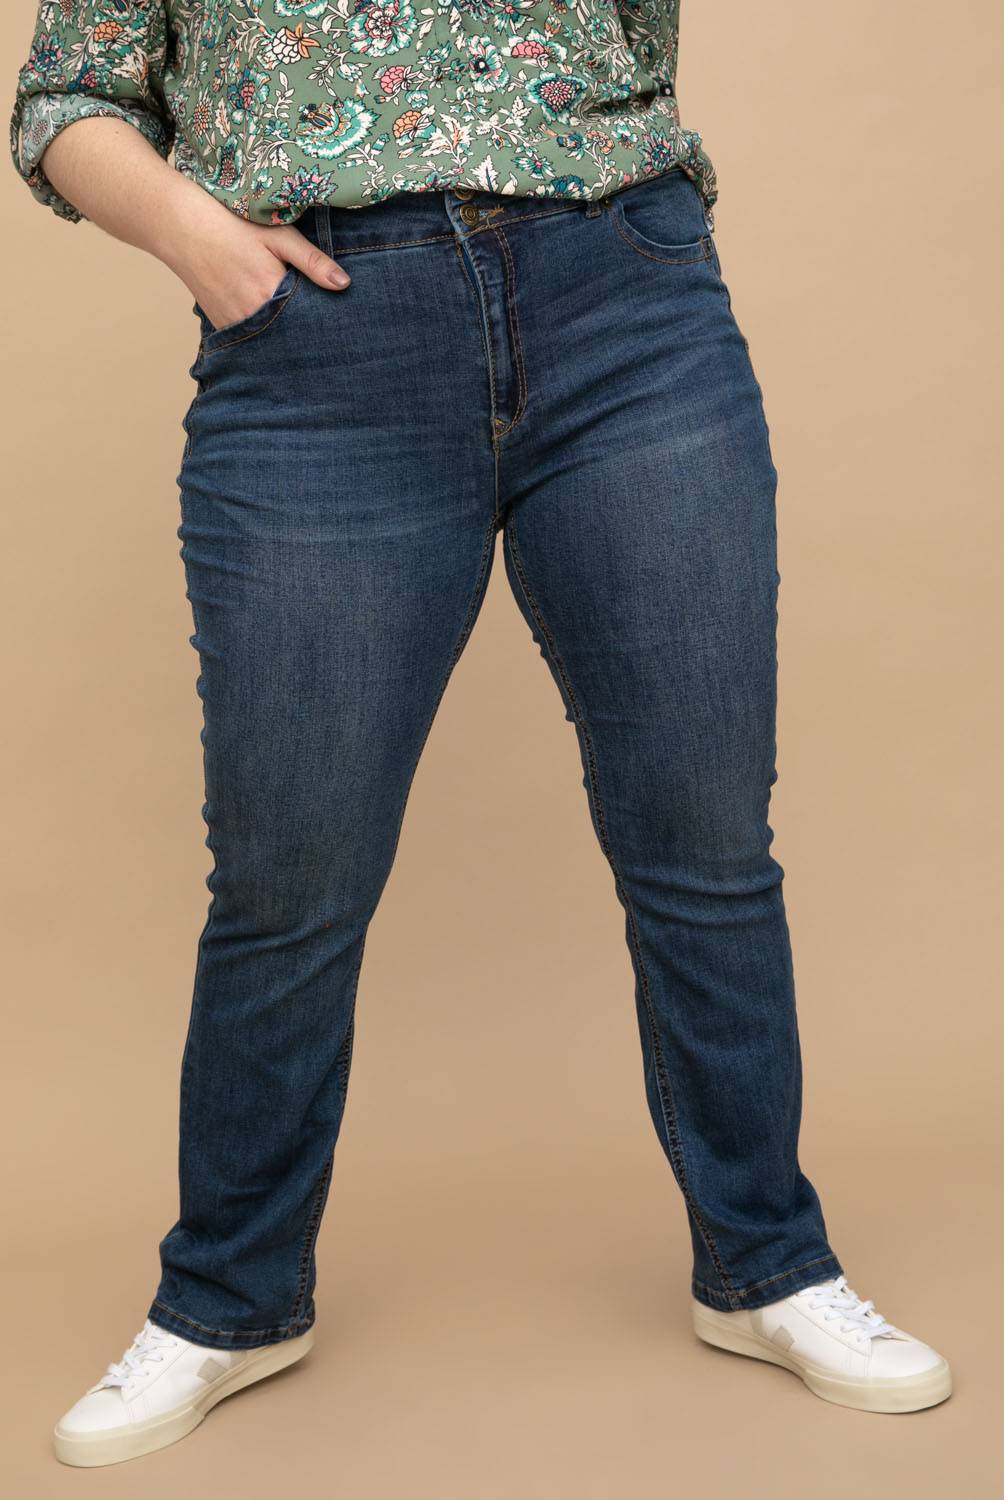 UNIVERSITY CLUB - Jeans Skinny Tiro Medio Mujer